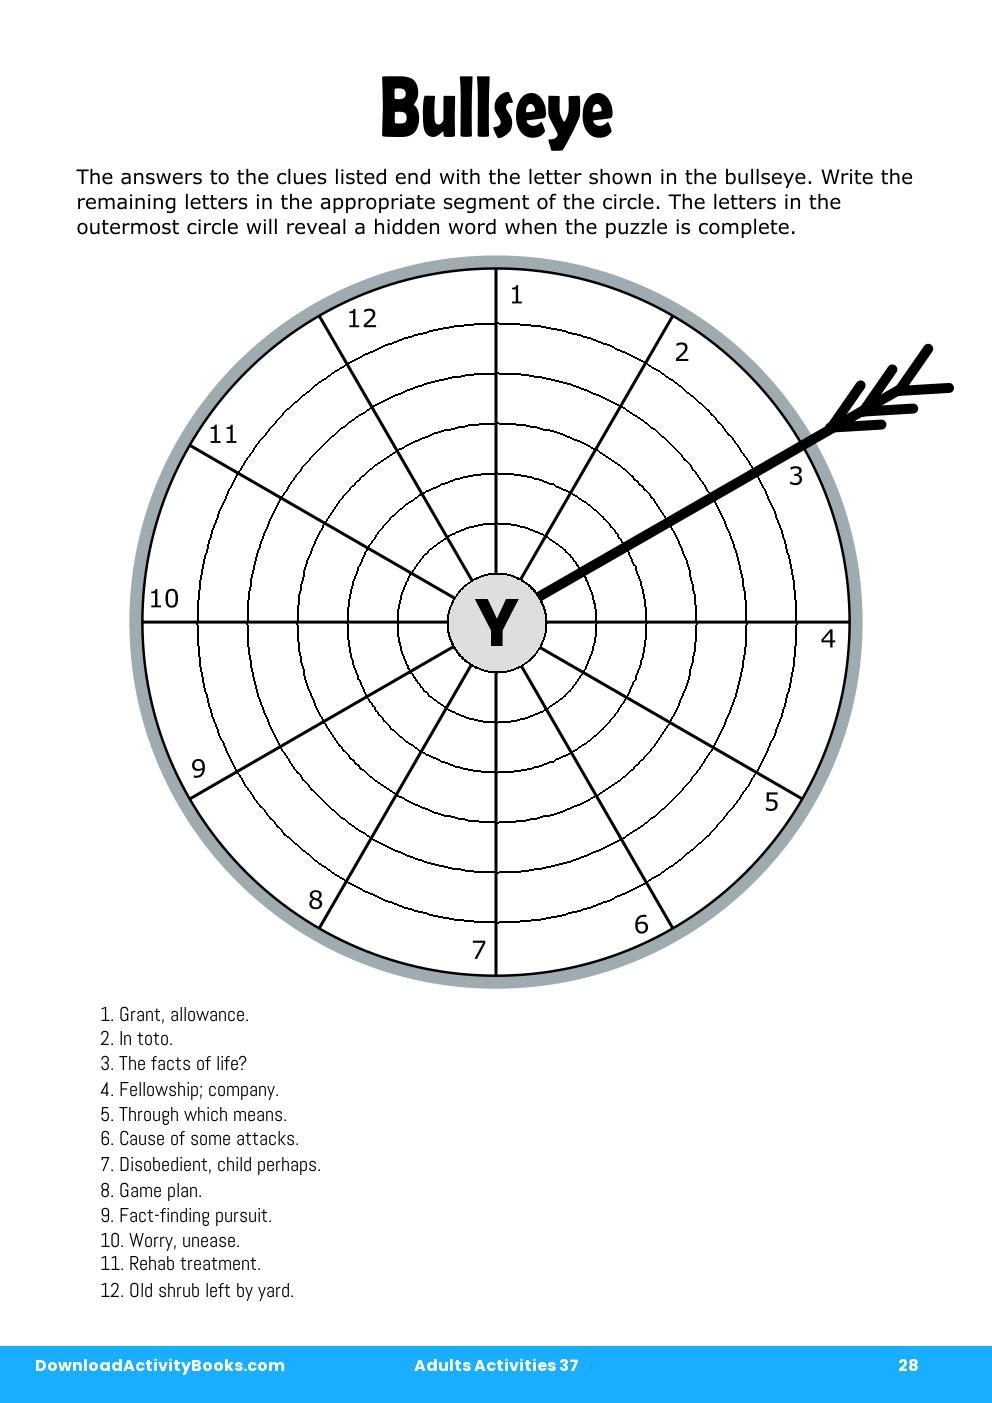 Bullseye in Adults Activities 37